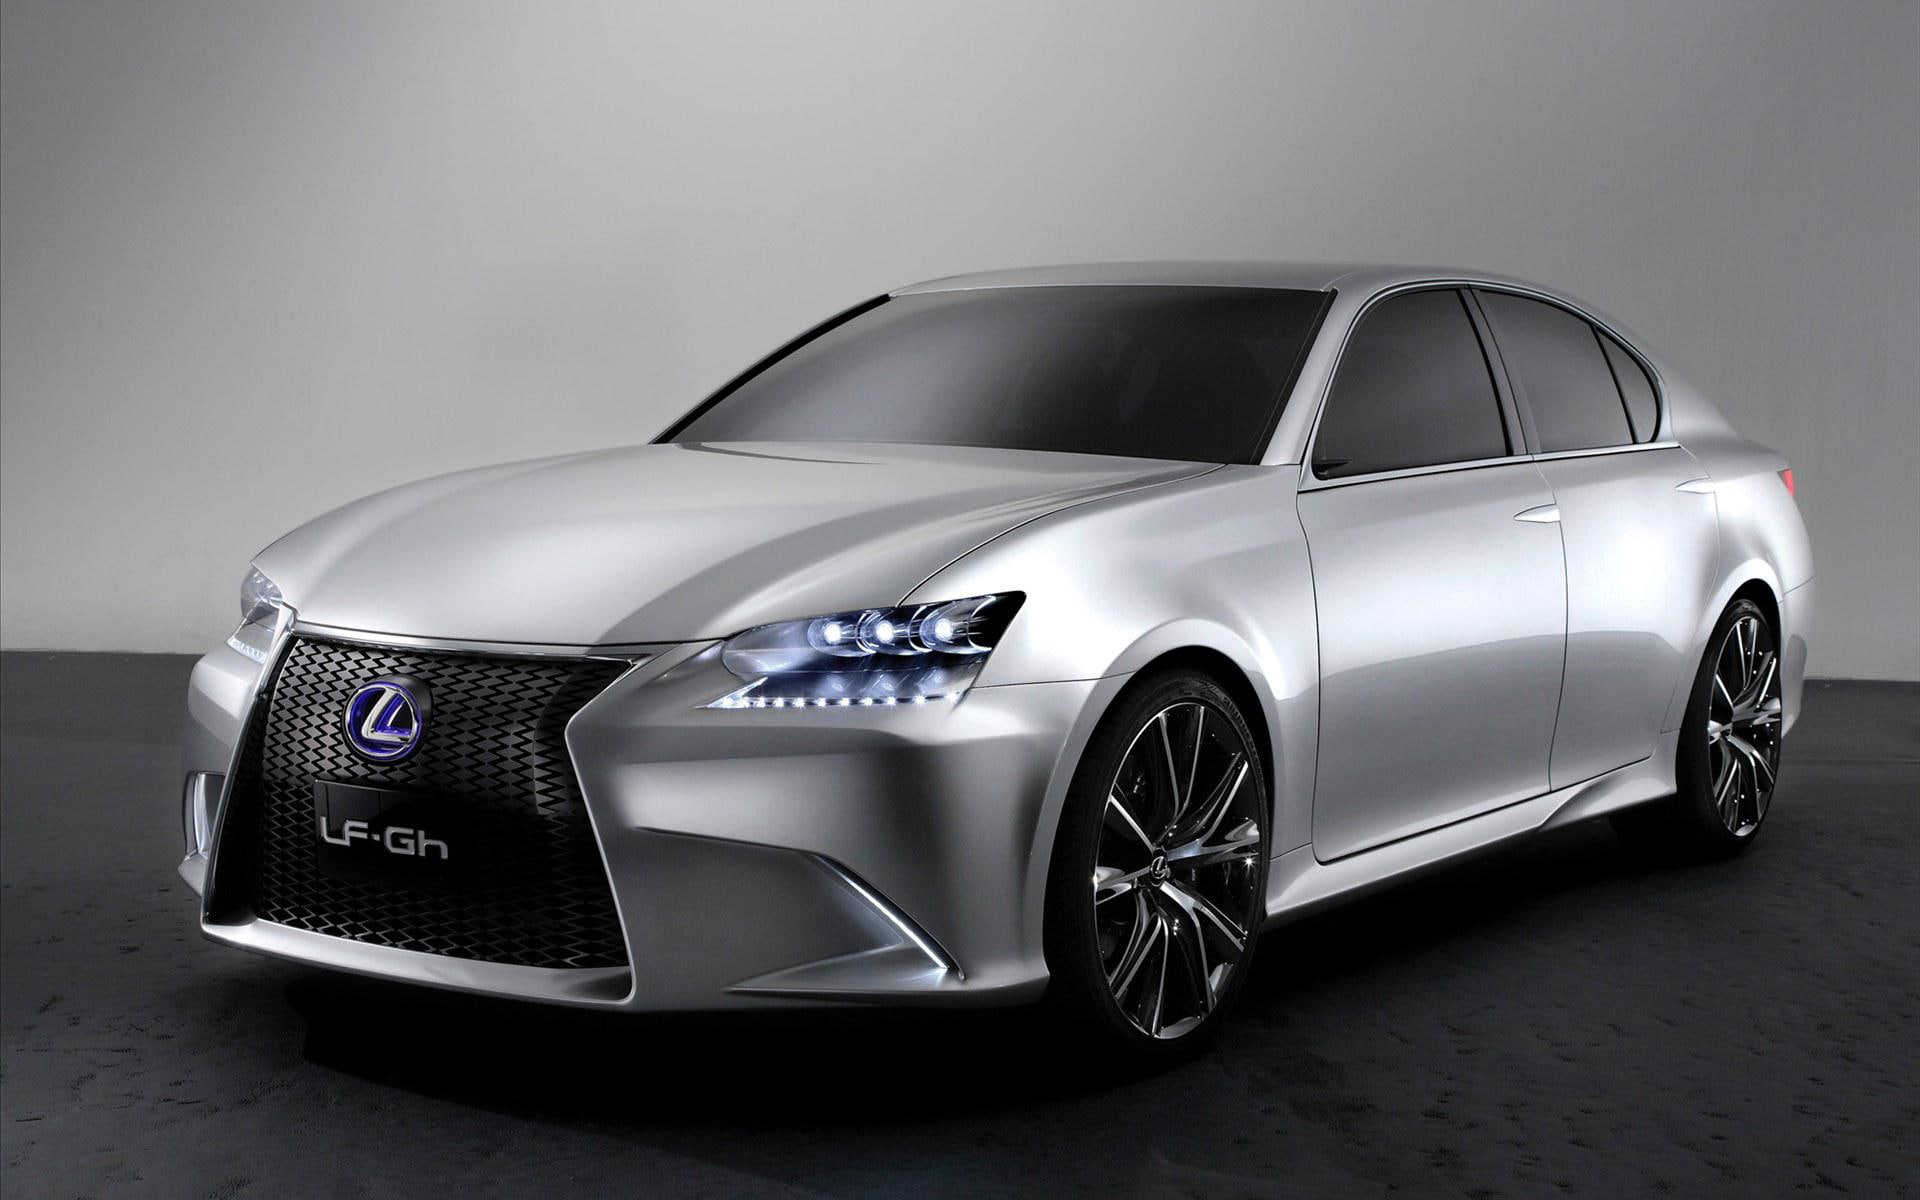 2011 Lexus Hybrid Concept, silver lexus lf-gh, cars